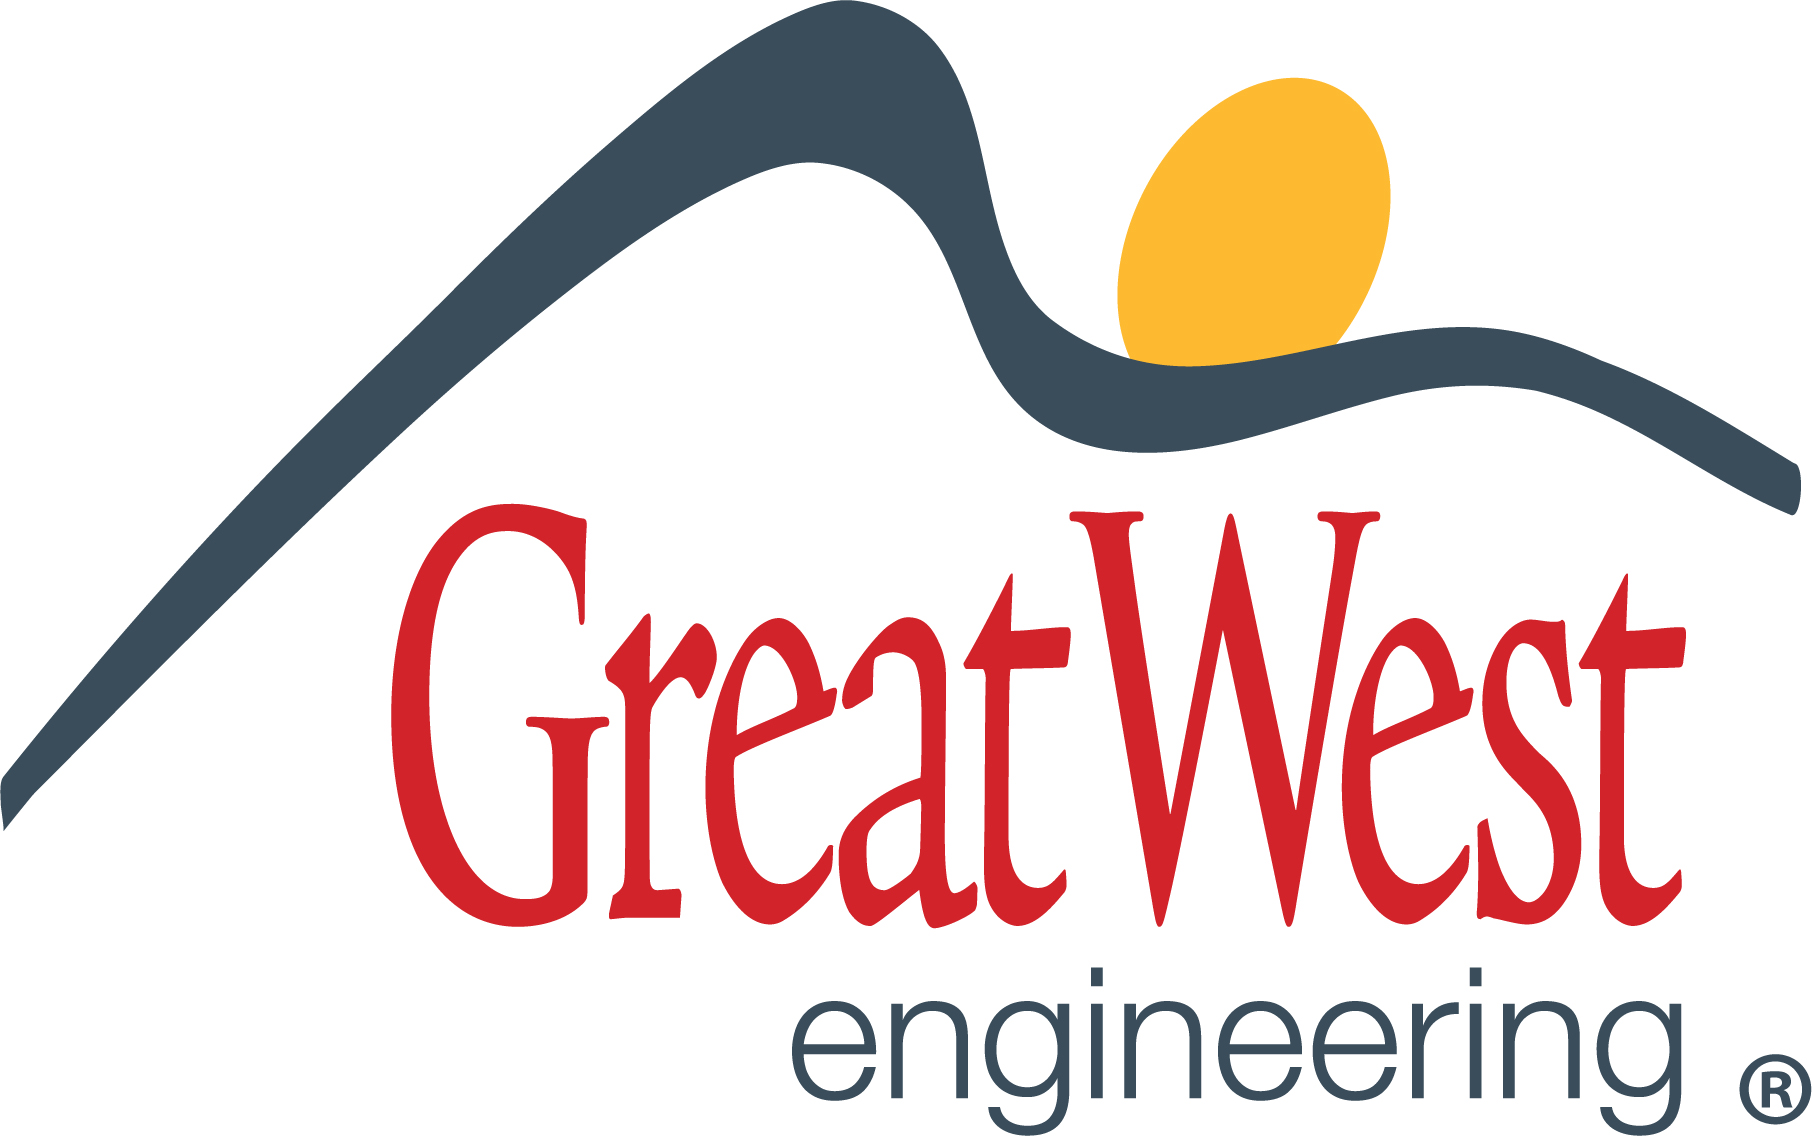 Great West Engineering, Inc logo